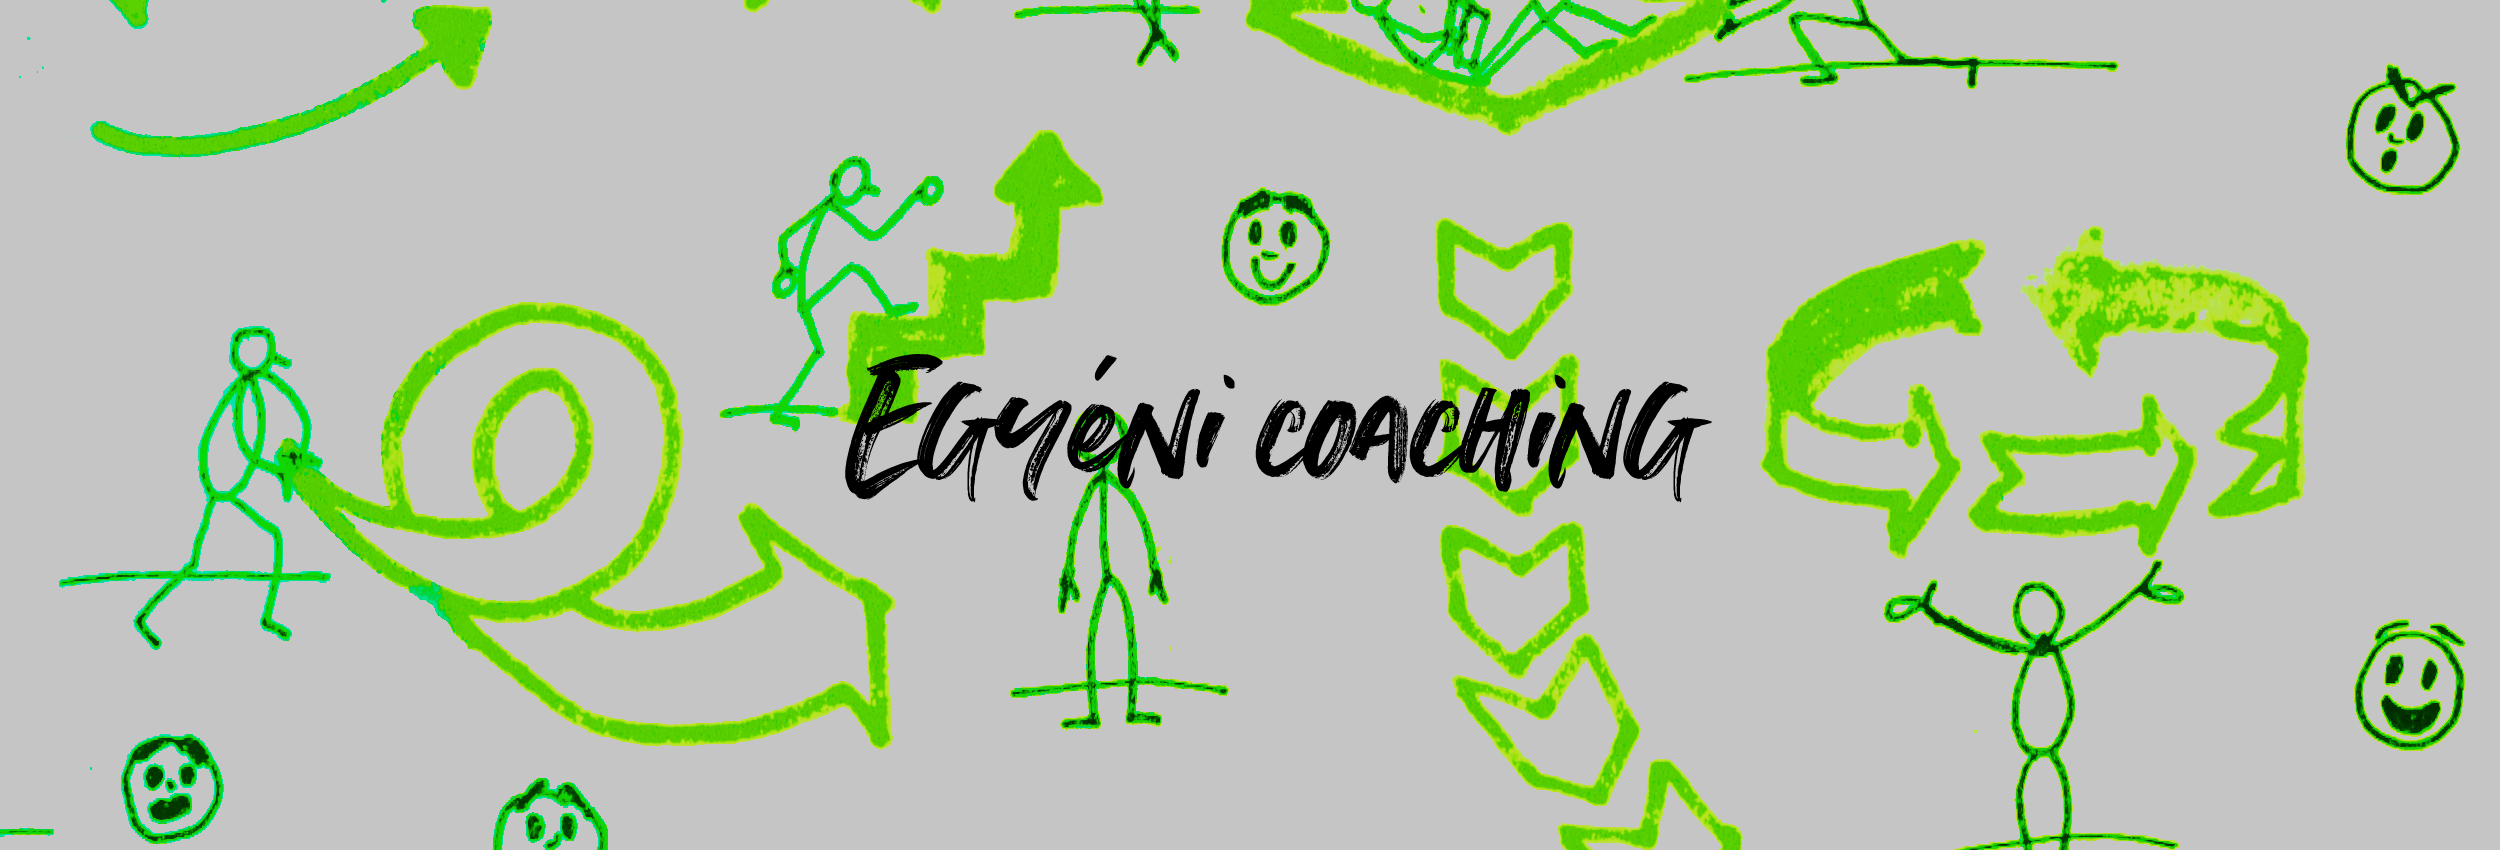 Egyéni coaching